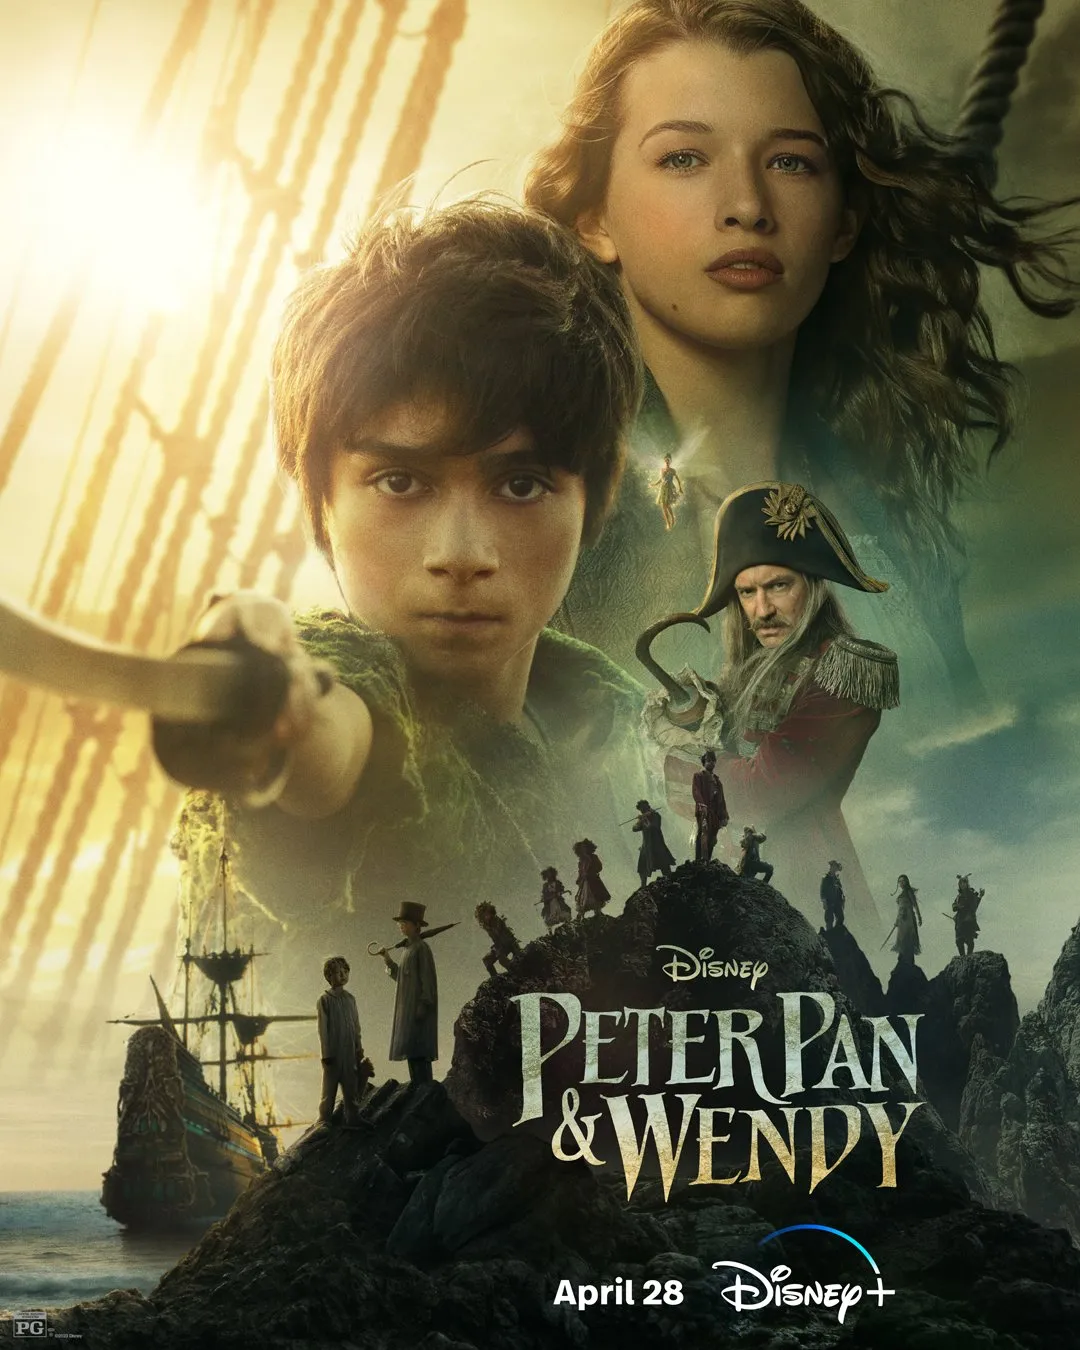 "Peter Pan & Wendy"